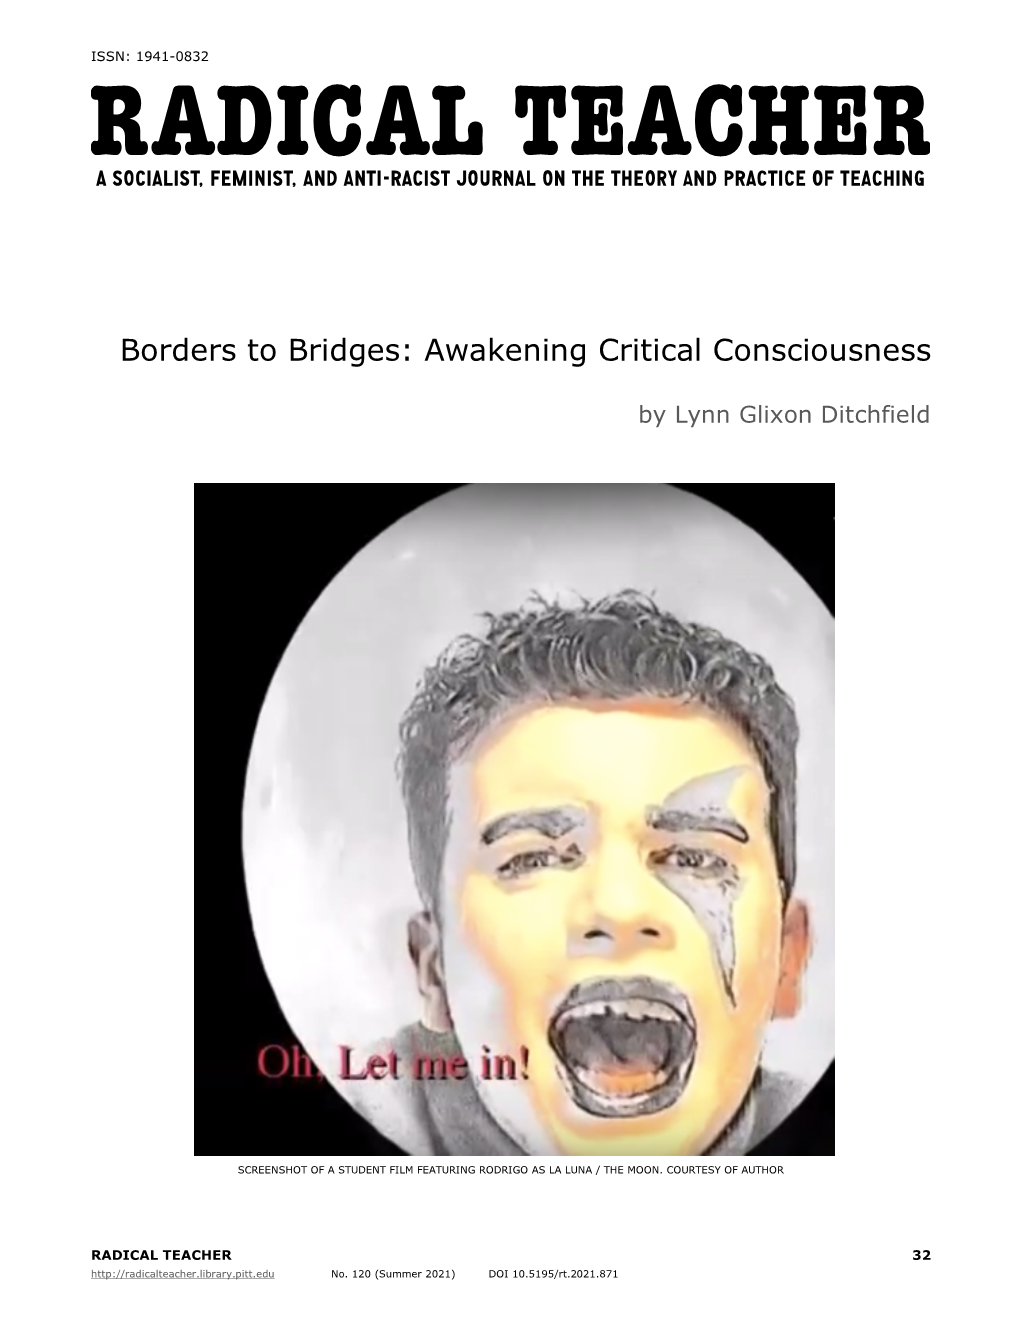 Borders to Bridges: Awakening Critical Consciousness